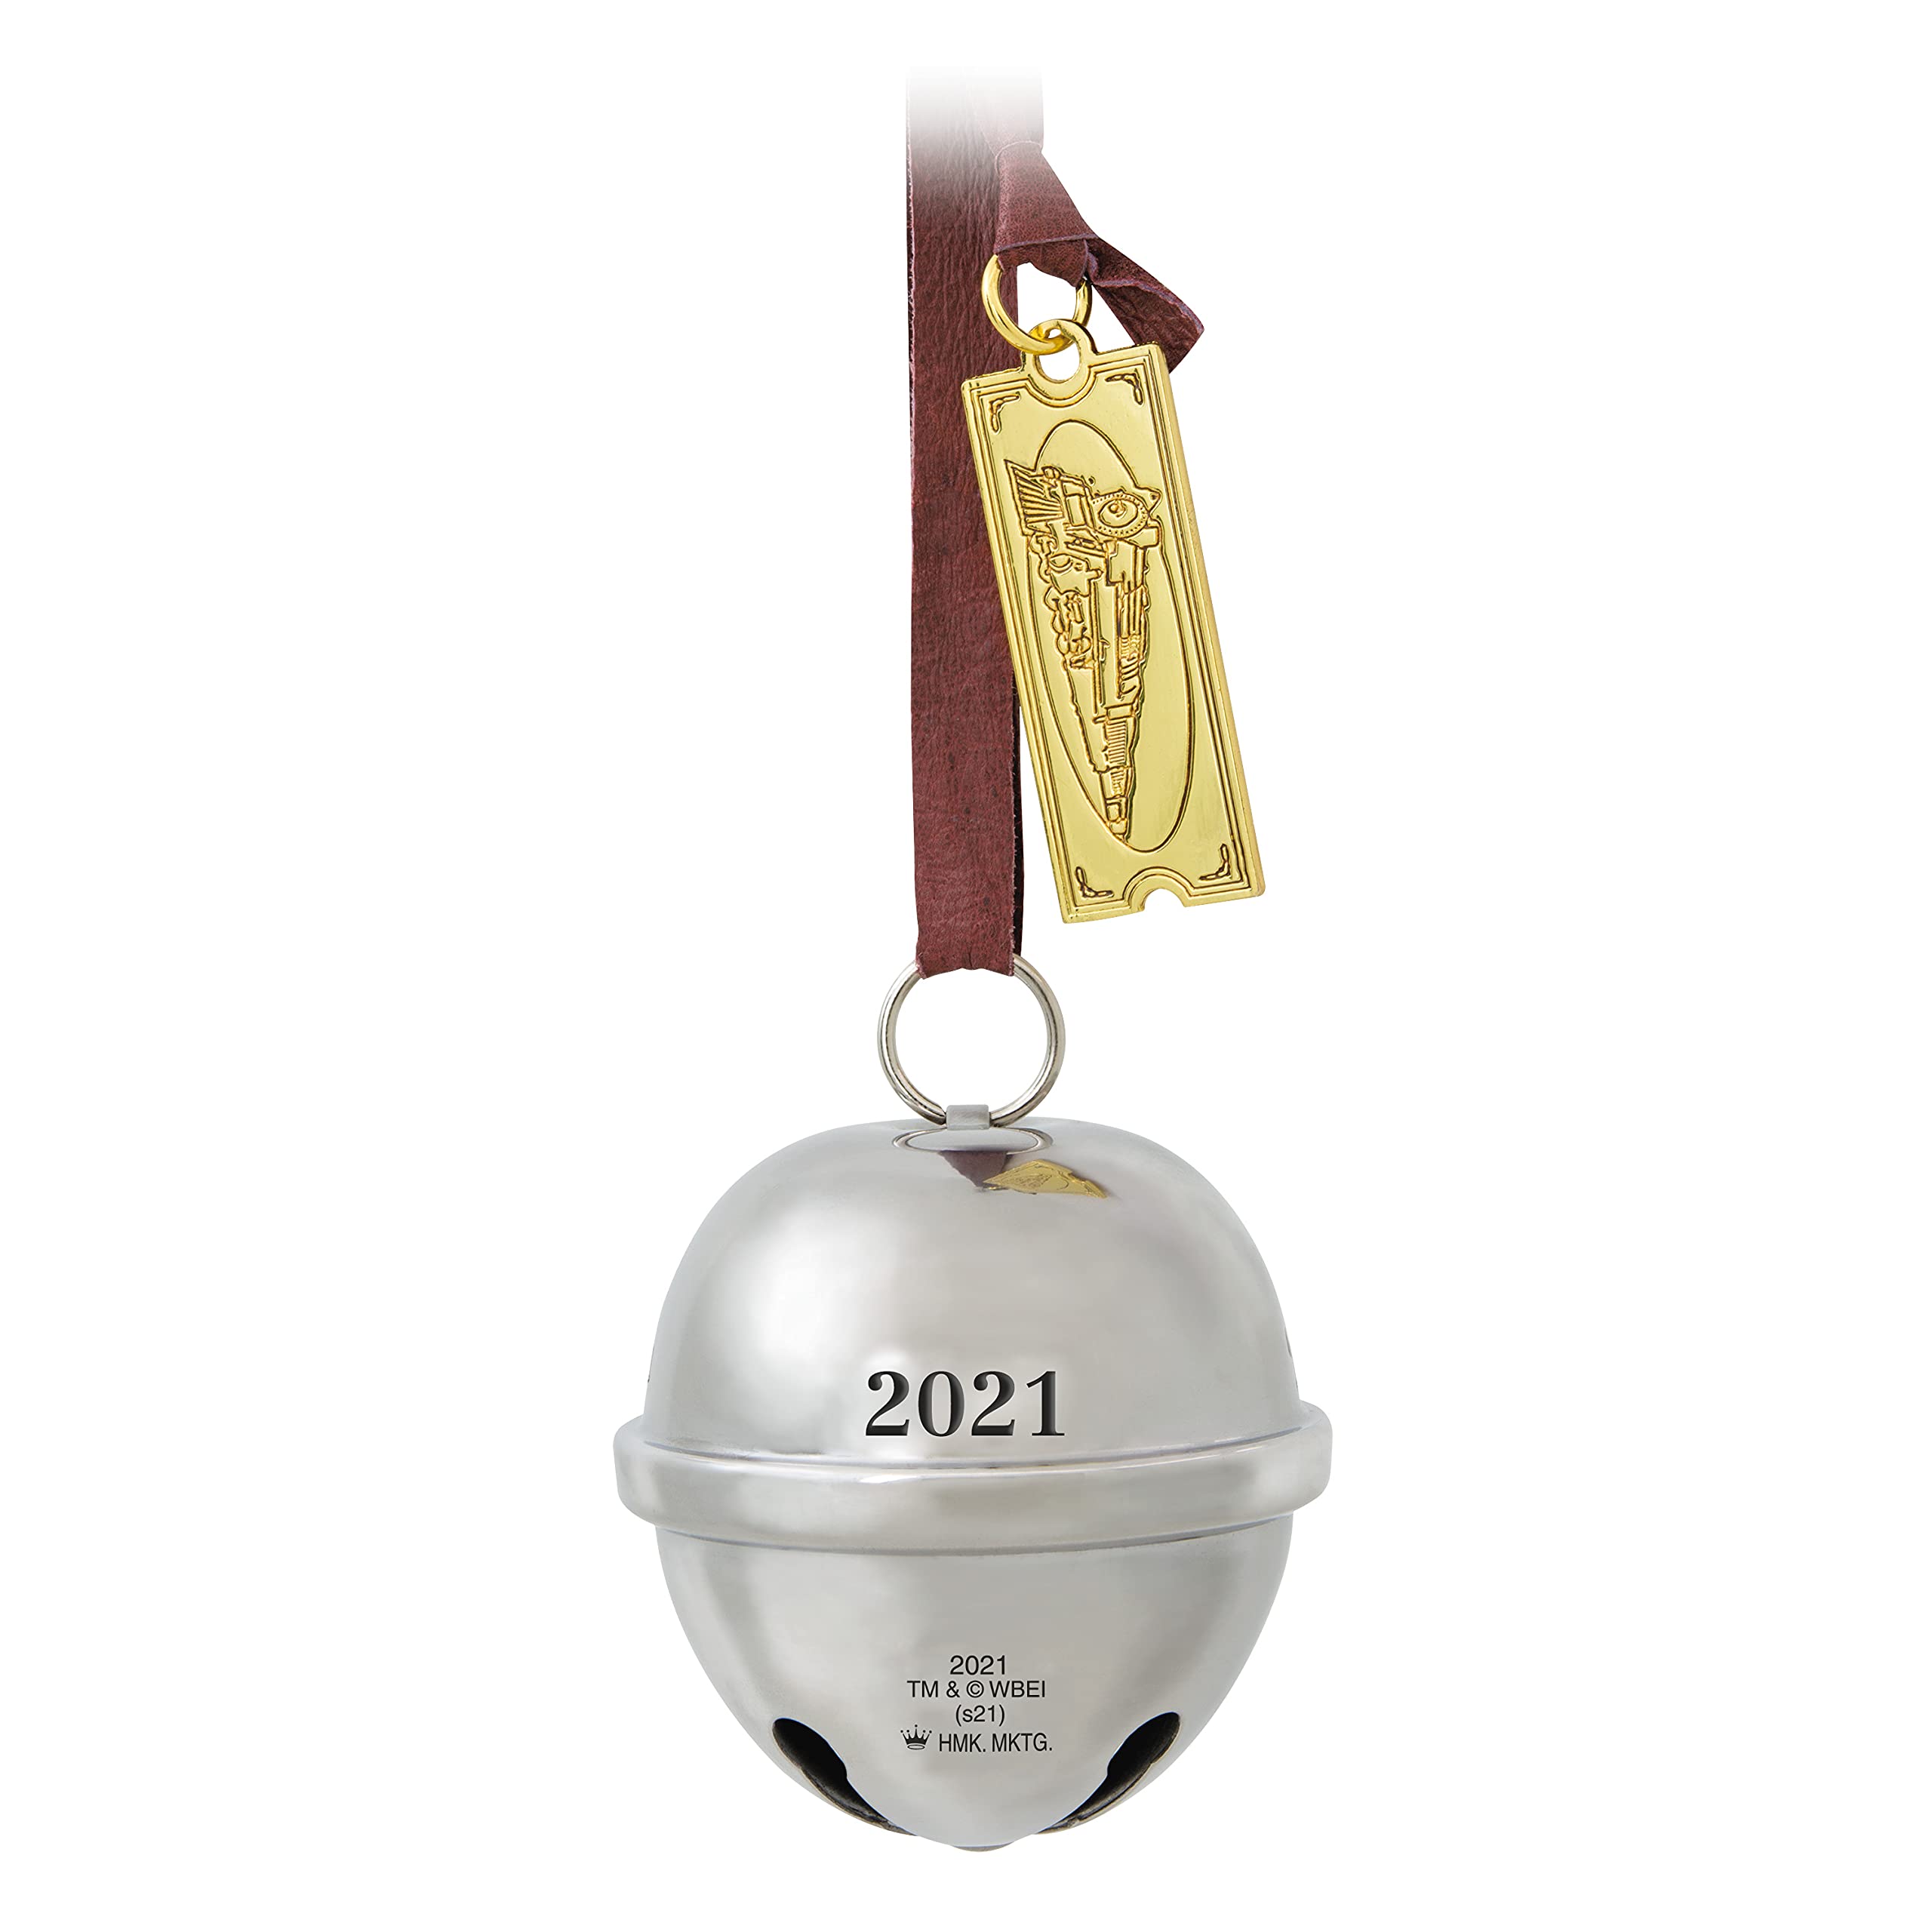 The Polar Express Santa's Sleigh Bell 2023 Hallmark Keepsake Christmas Ornament